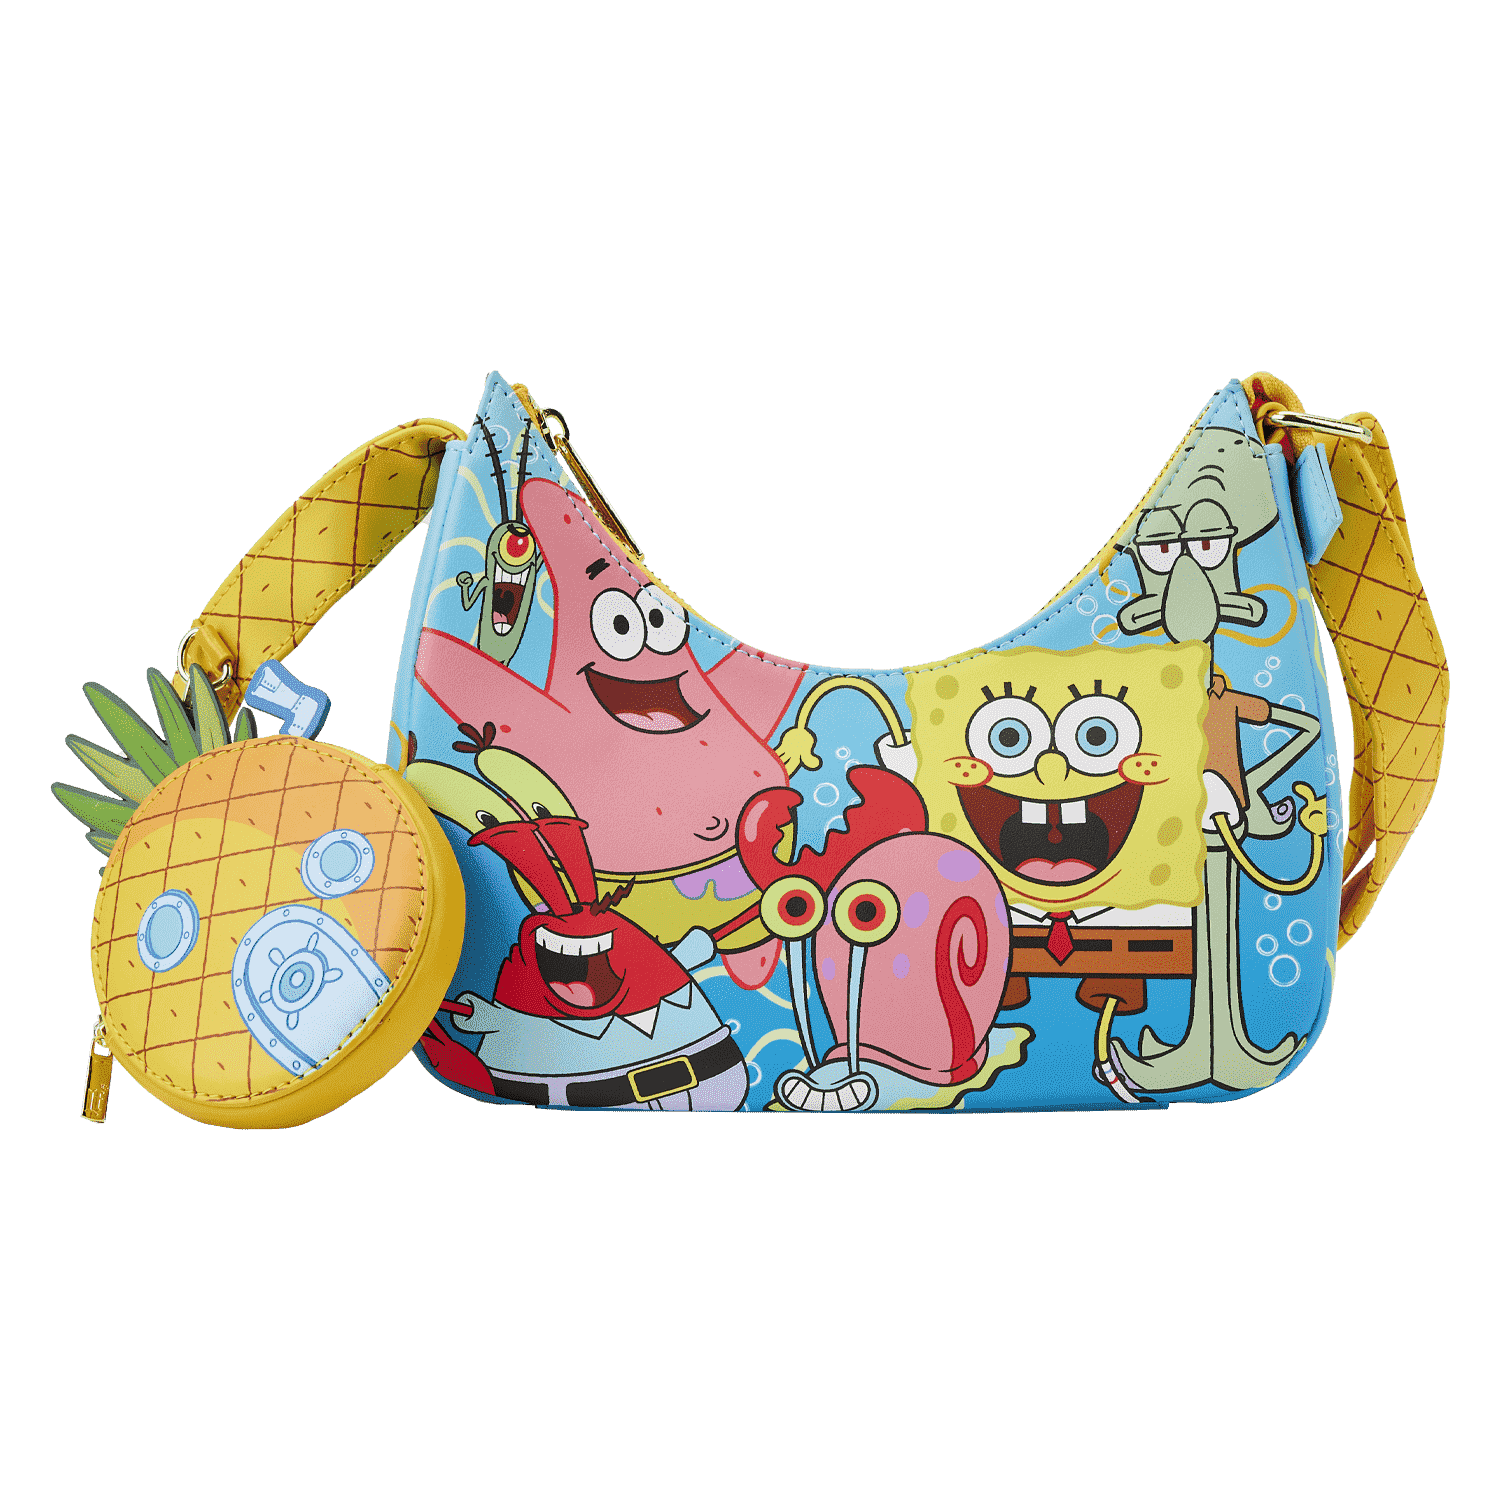 Buy SpongeBob SquarePants Group Shot Crossbody Bag at Loungefly.